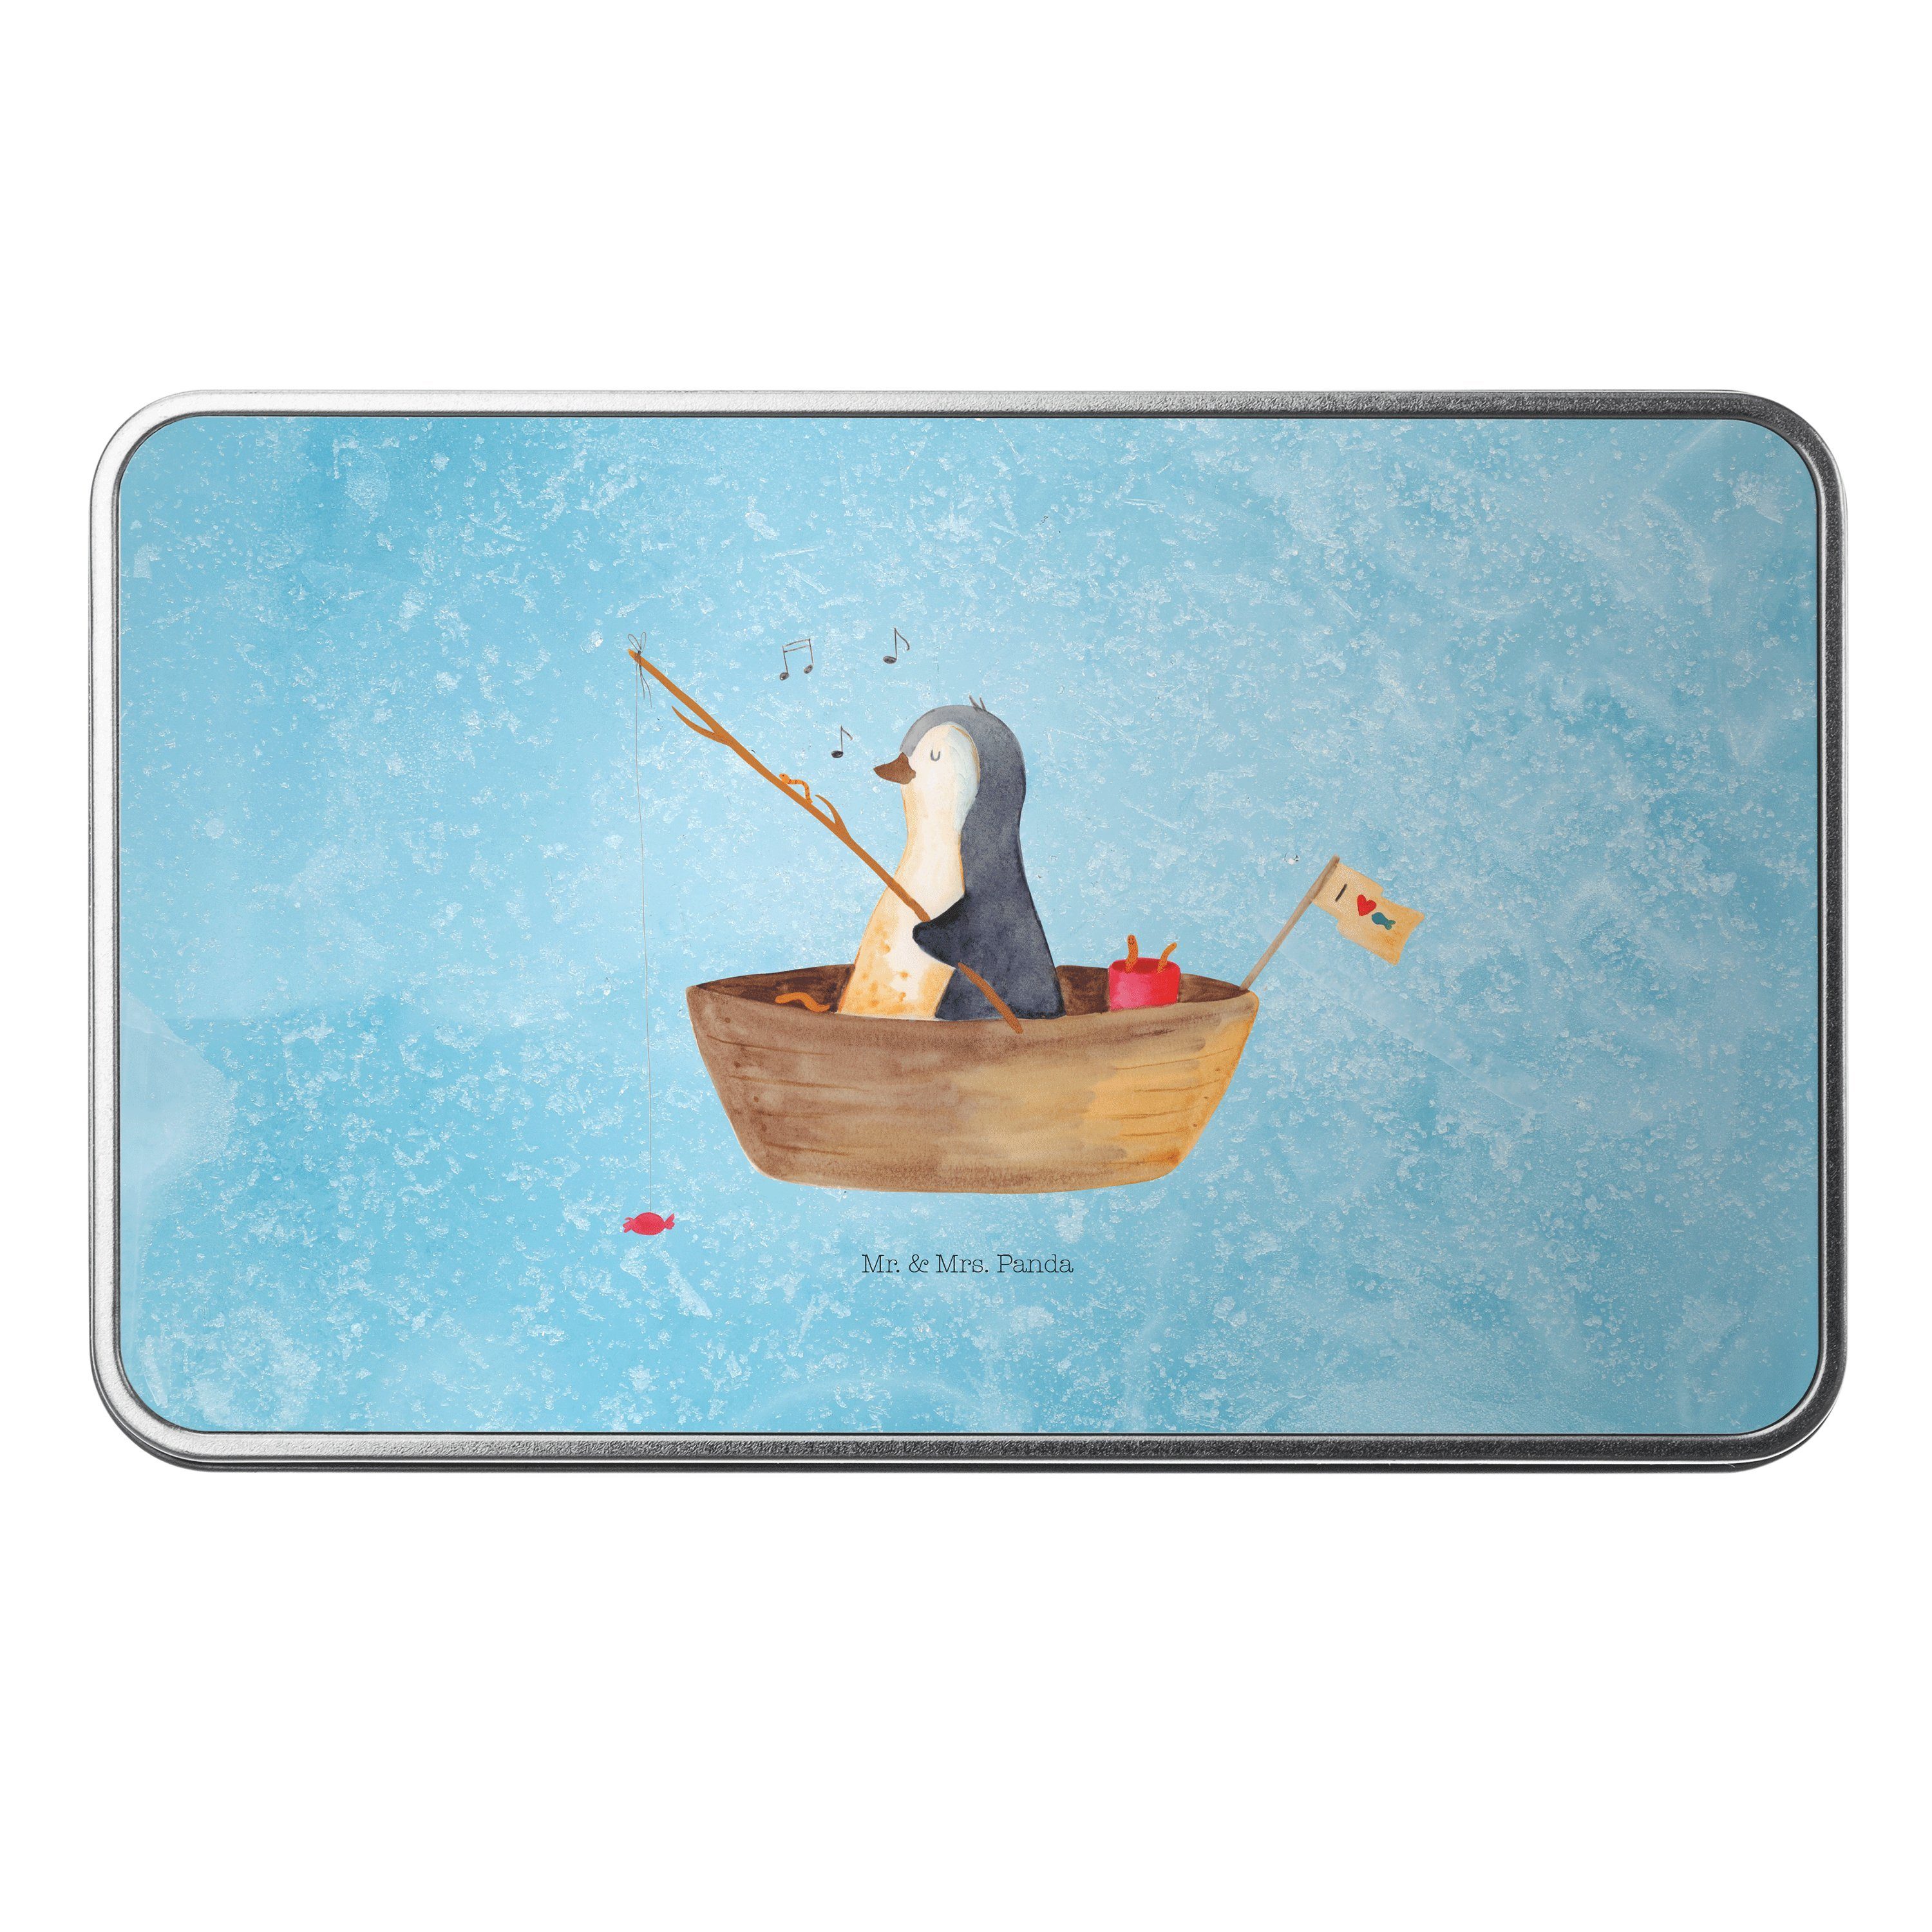 Mr. & Mrs. Panda Dose Pinguin Angelboot - Eisblau - Geschenk, Leben, Container, Dose, Blech (1 St) | Dosen